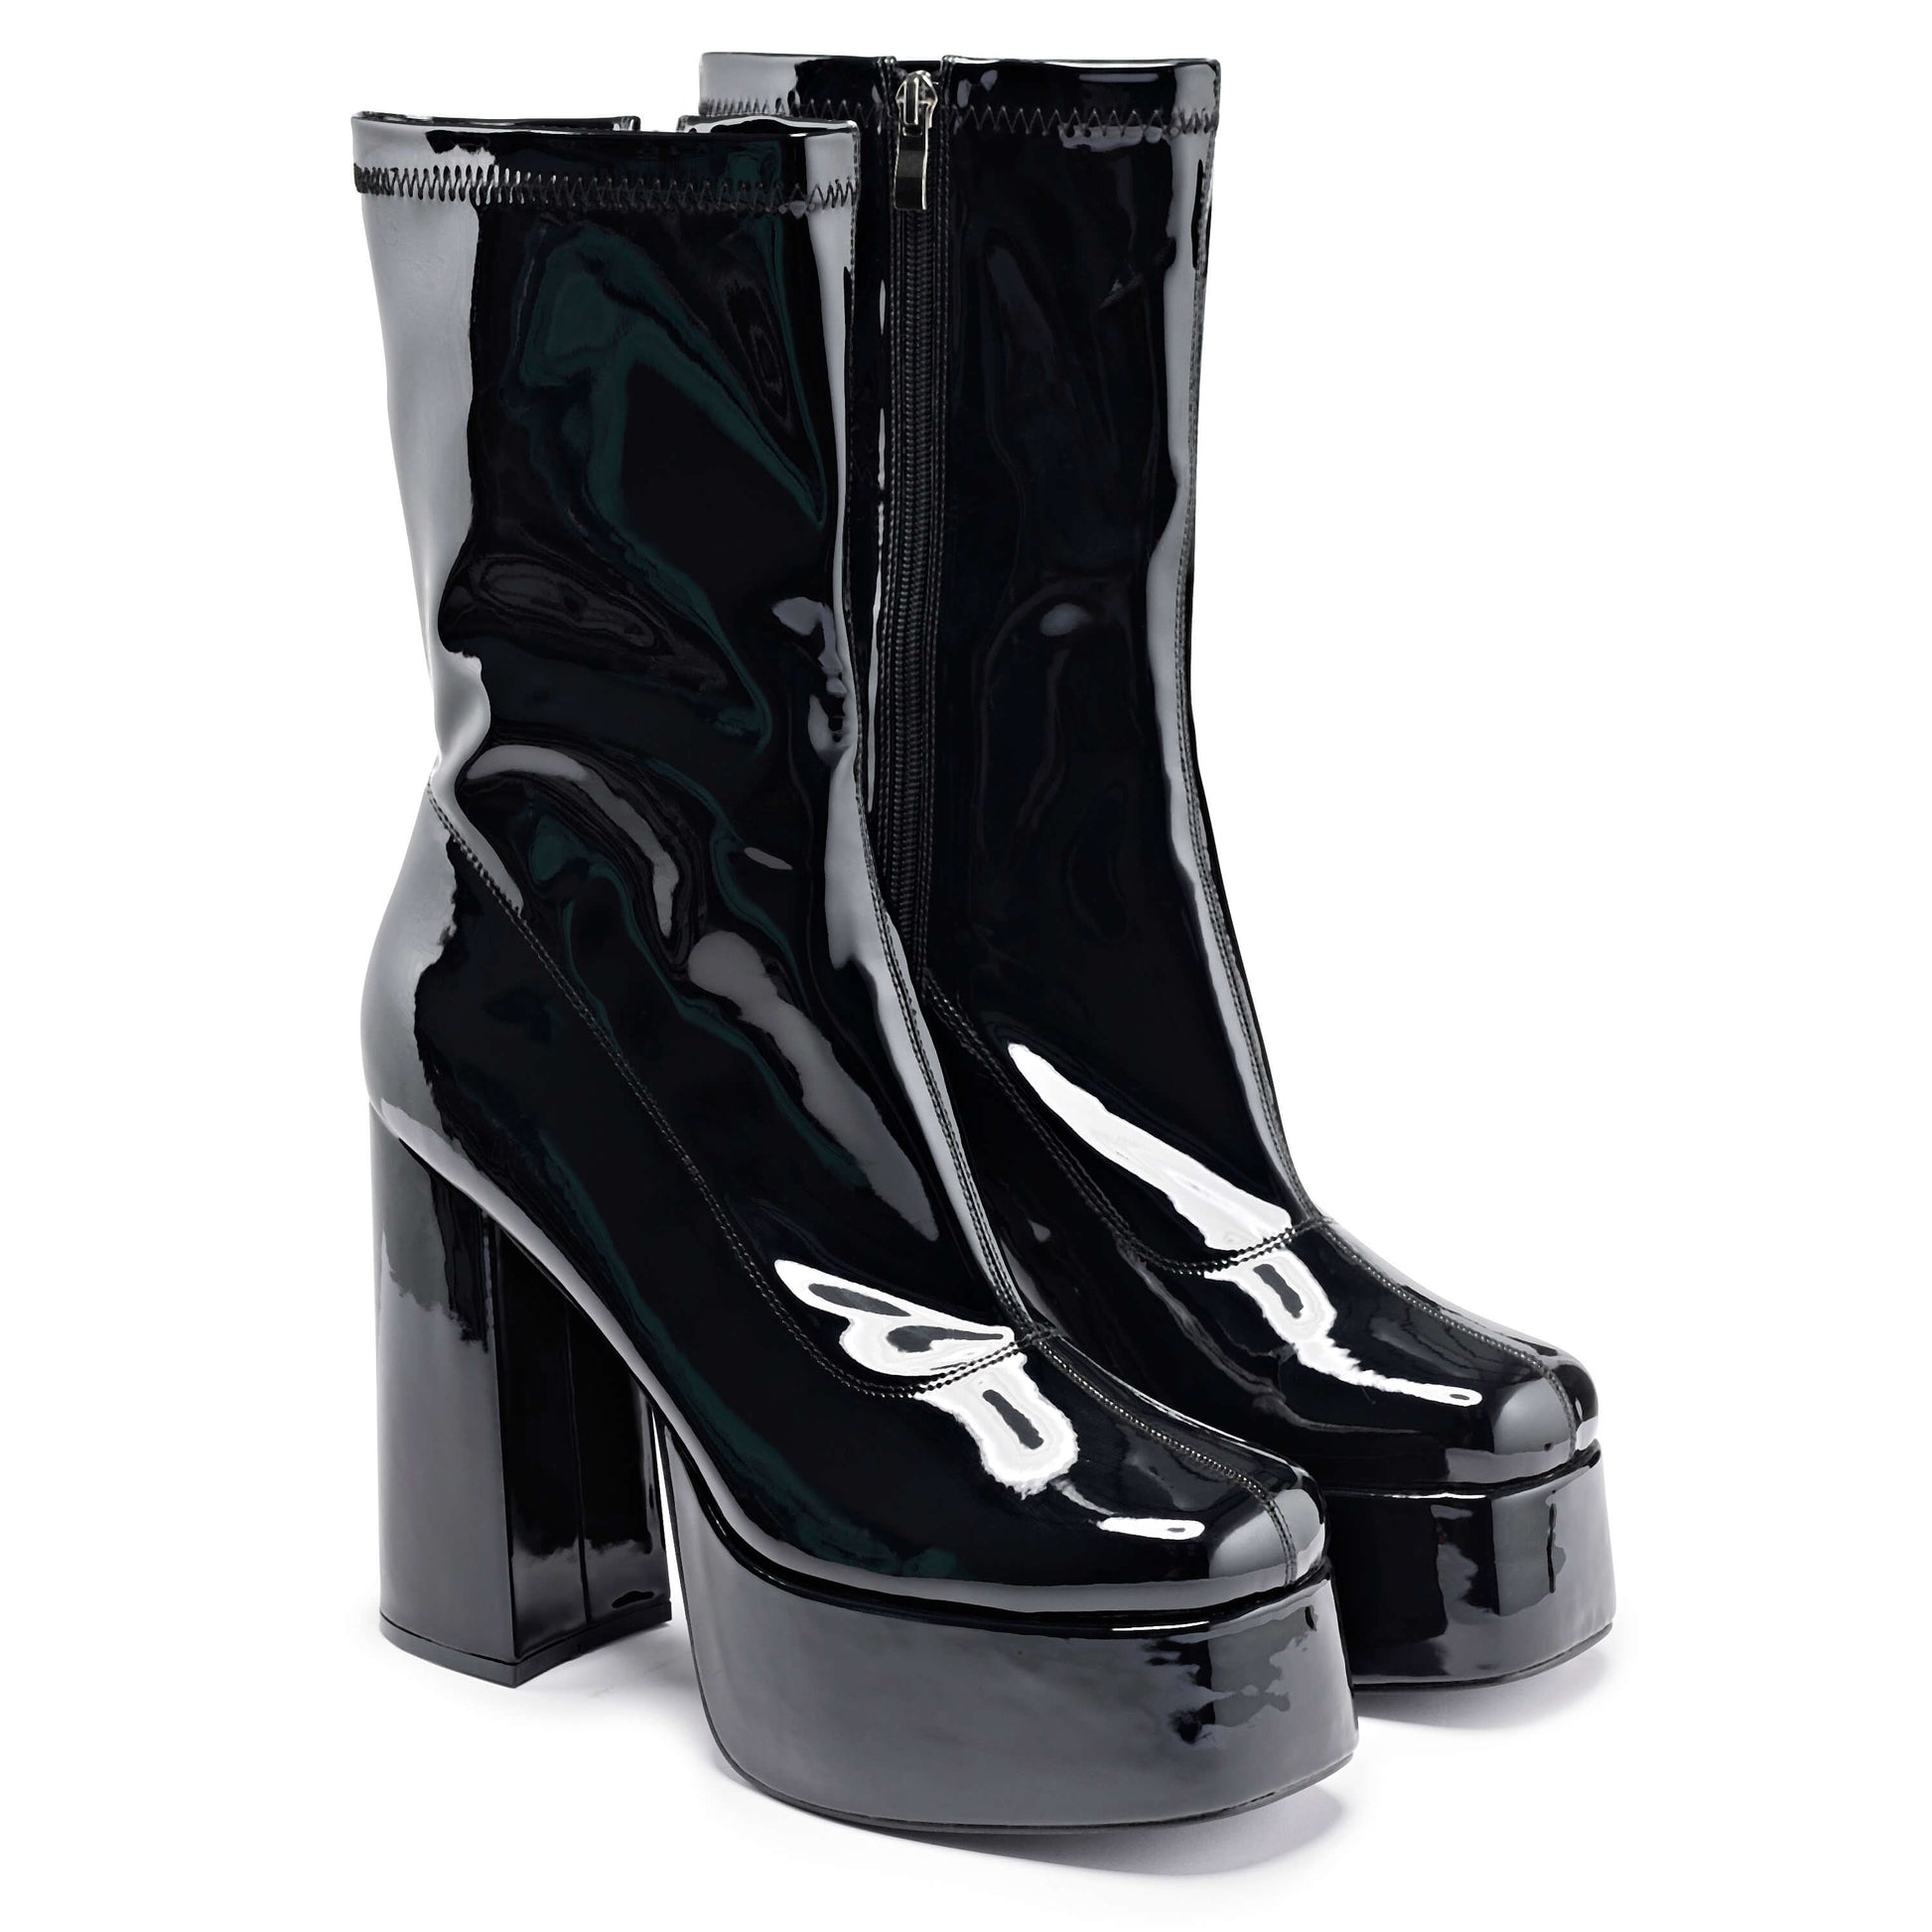 Delano Men's Black Patent Platform Heeled Boots - Ankle Boots - KOI Footwear - Black - Three-Quarter View